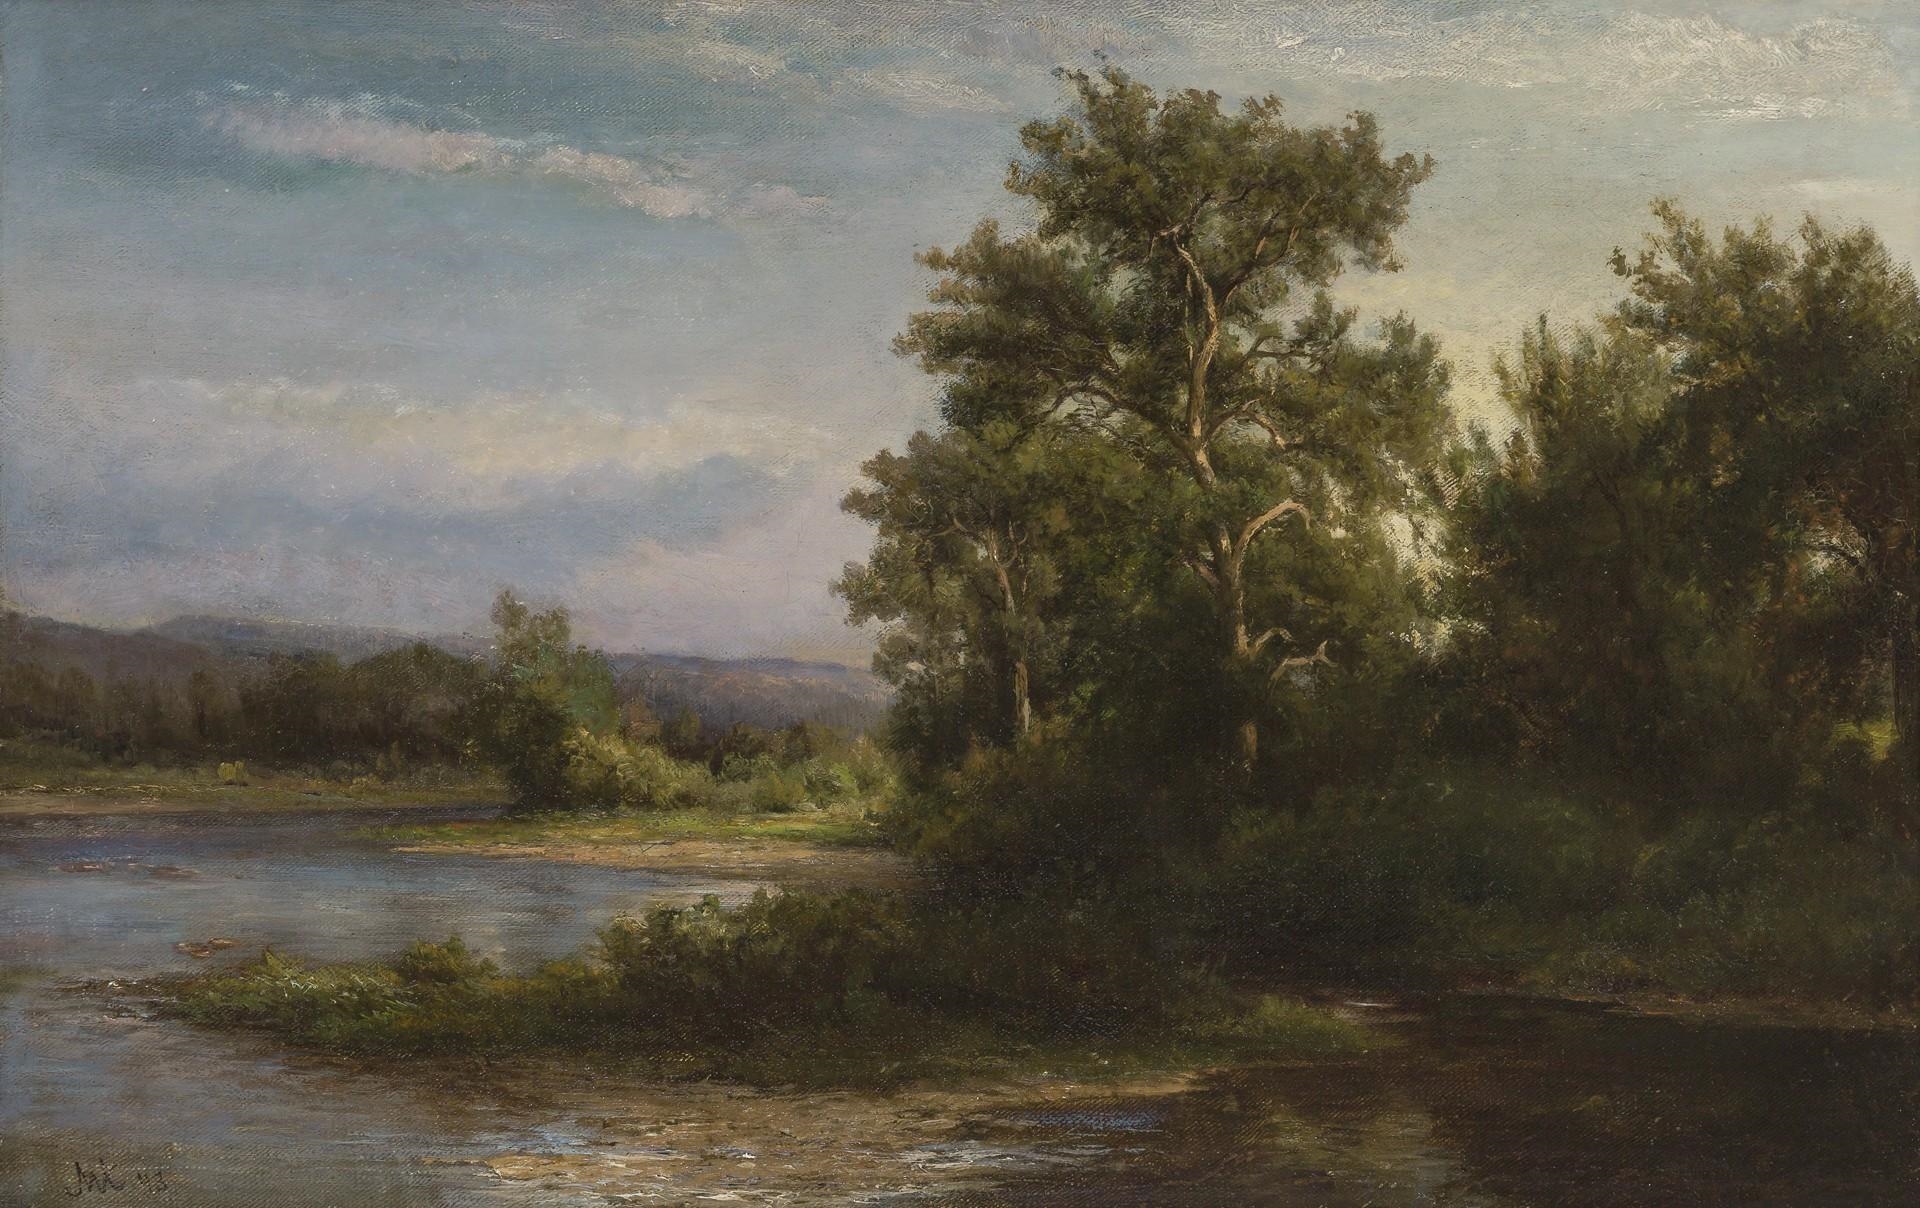 Landscape, 1843 by John William Casilear, 1843